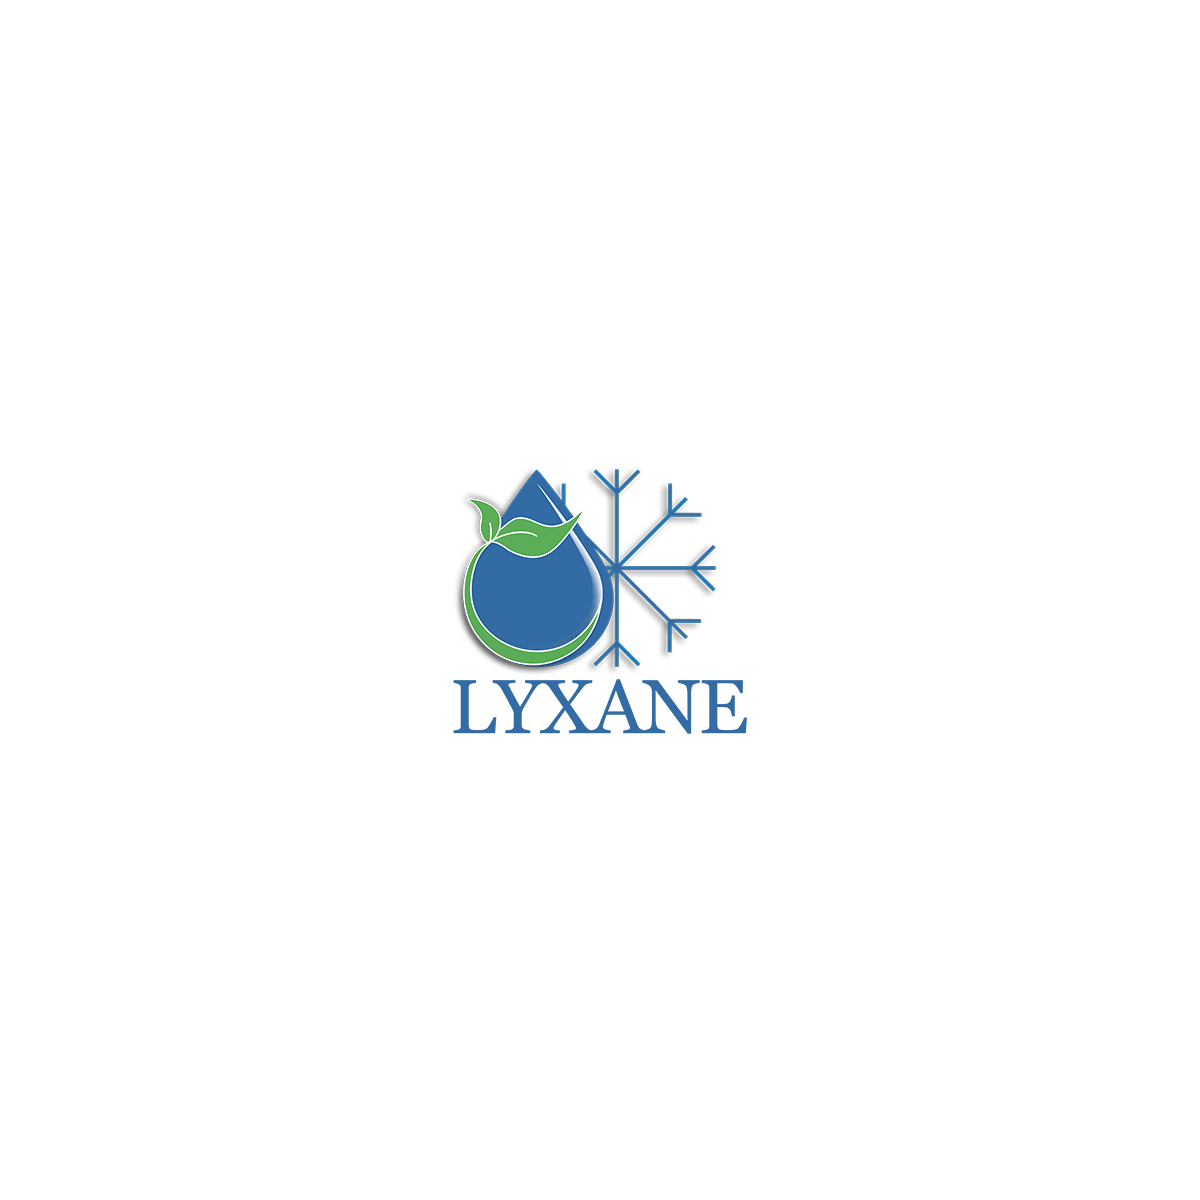 ANGELIQUE DAMOUR - Projet Lyxane - logo